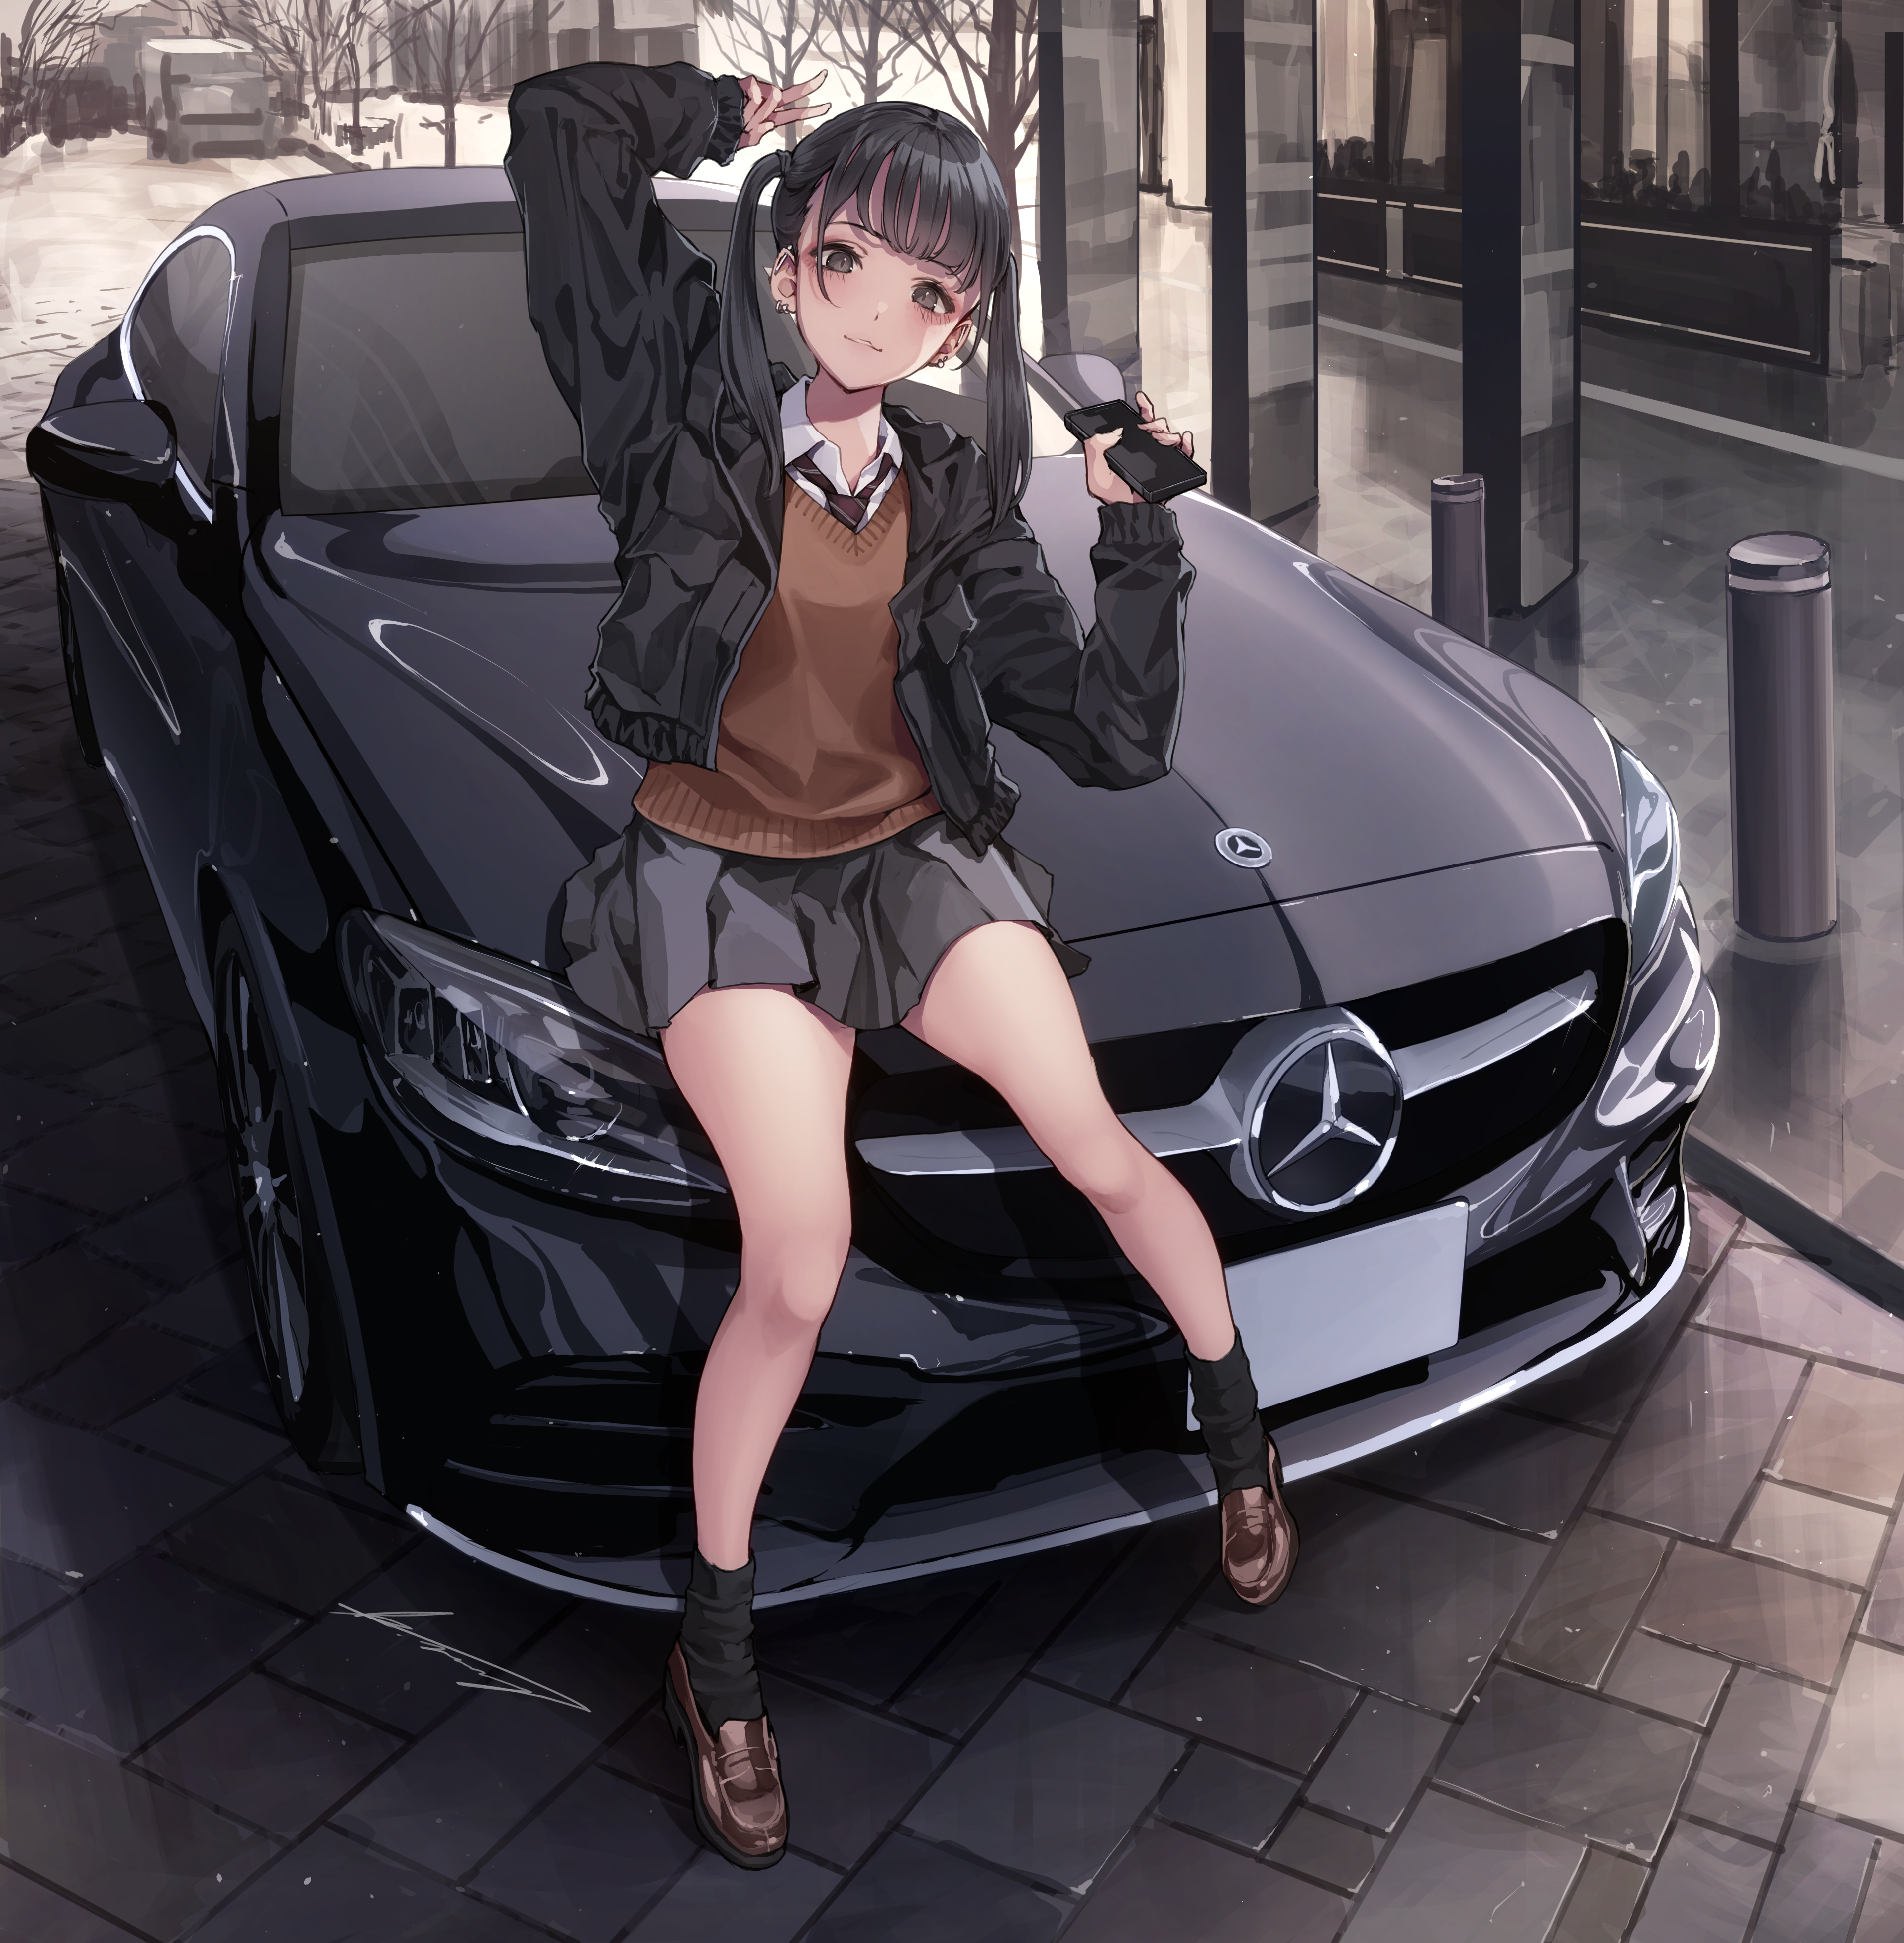 Anime Girls Original Characters Black Cars Mercedes Benz Car School Uniform Black Hair Pigtails Koh 3826x3904